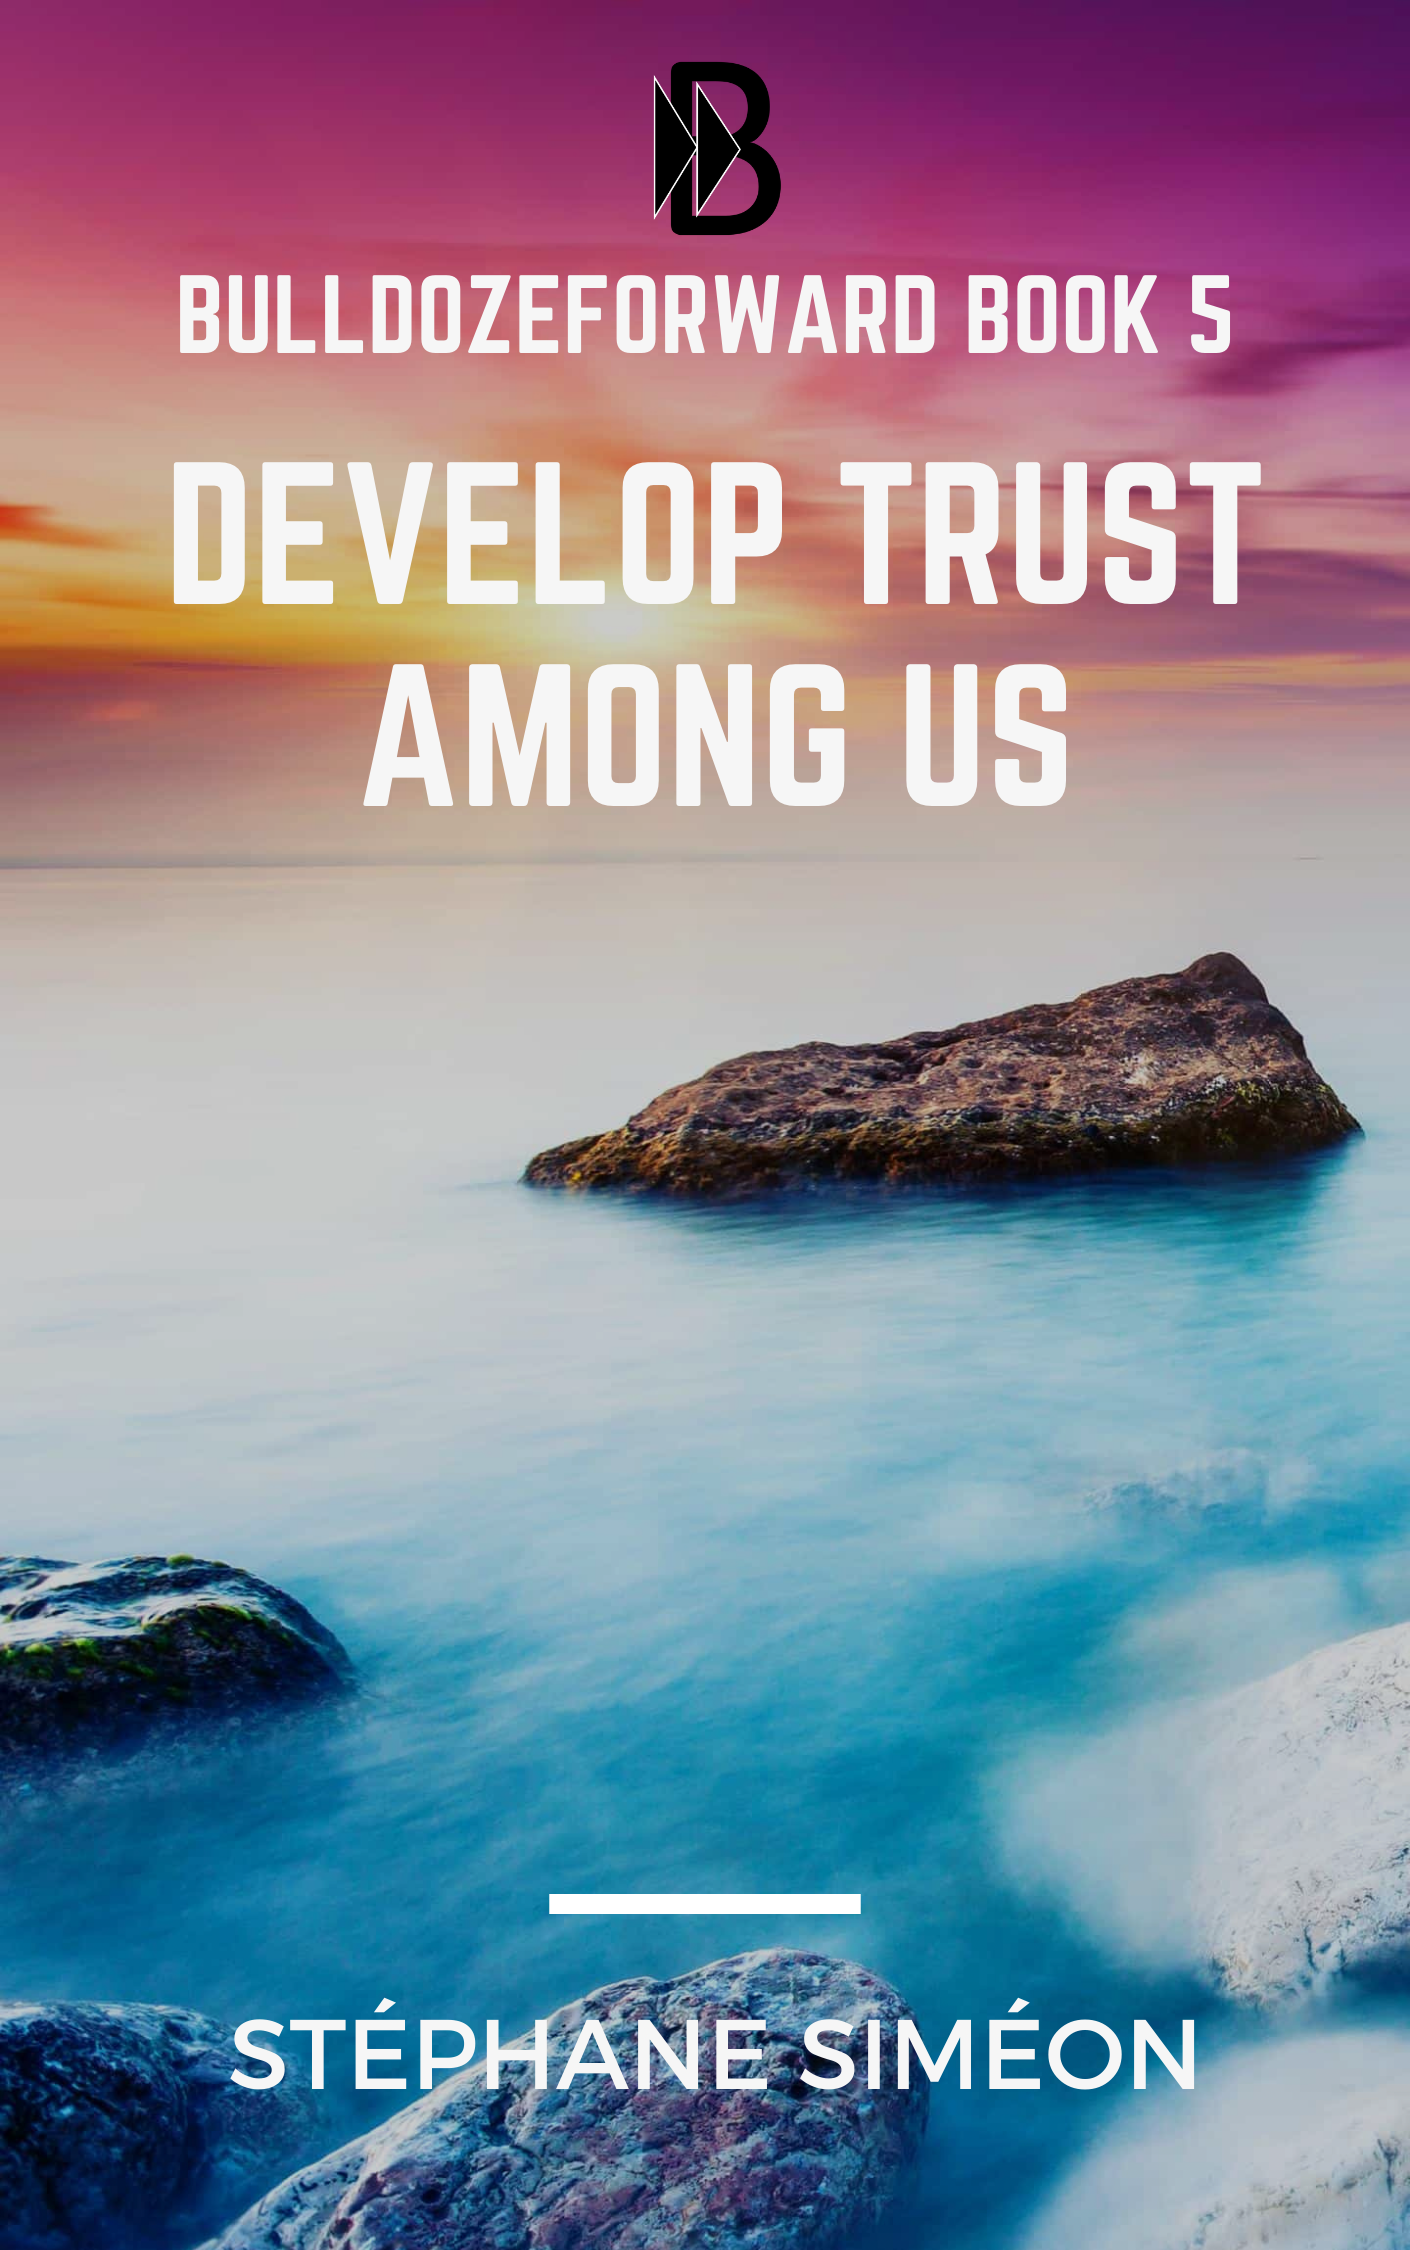 BulldozeForward Book 5 Develop Trust Among Us.png